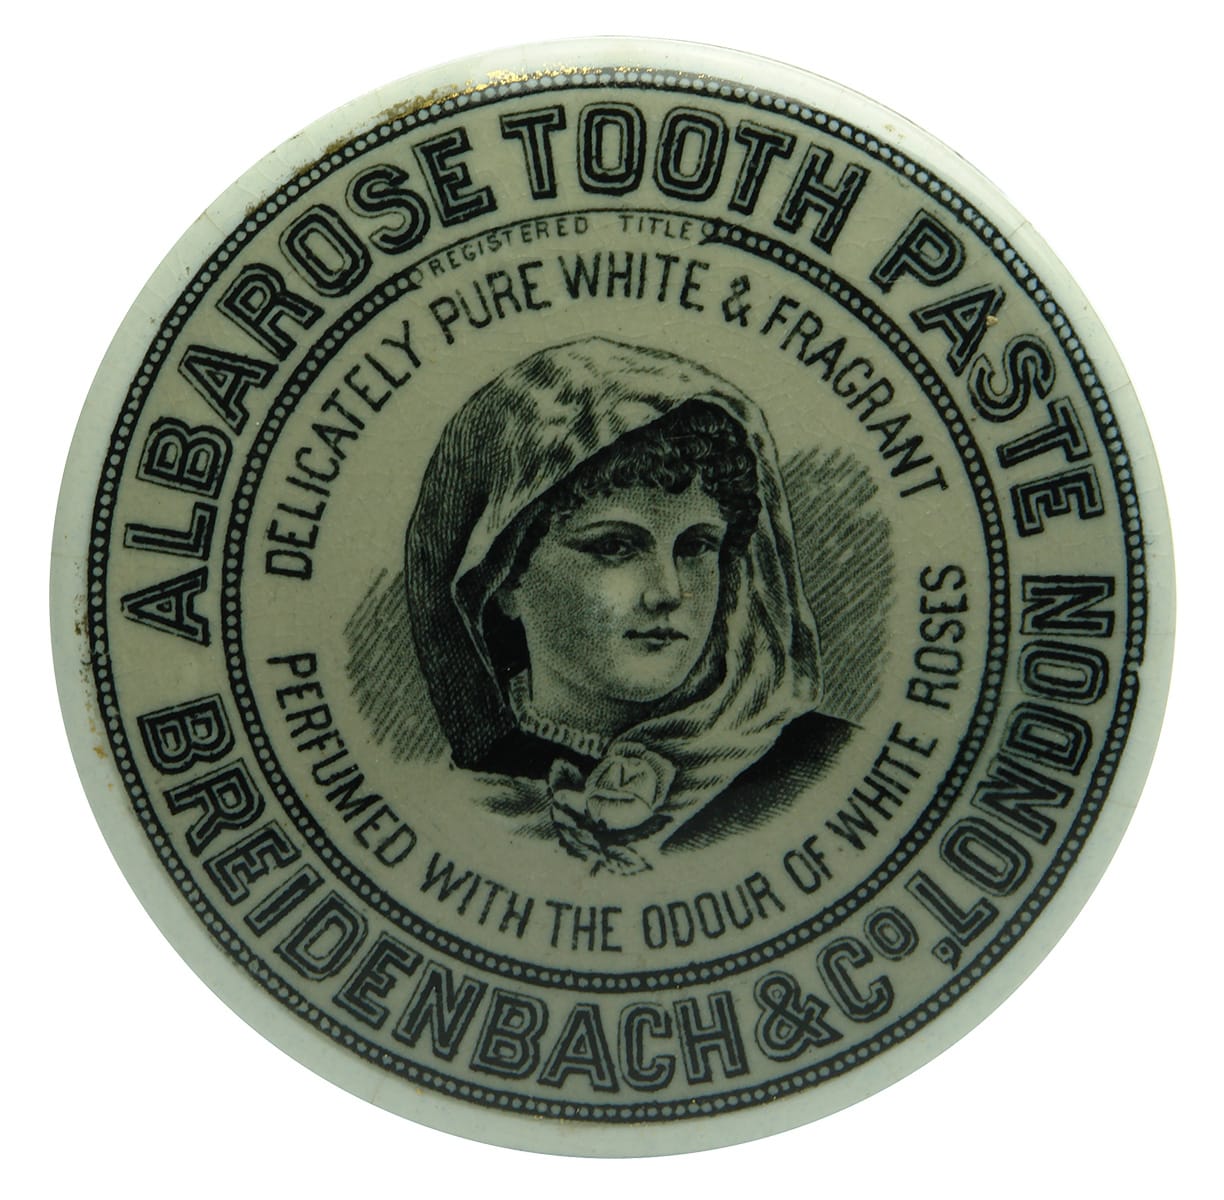 Albarose Tooth Paste Breidenbach London Antique Pot Lid